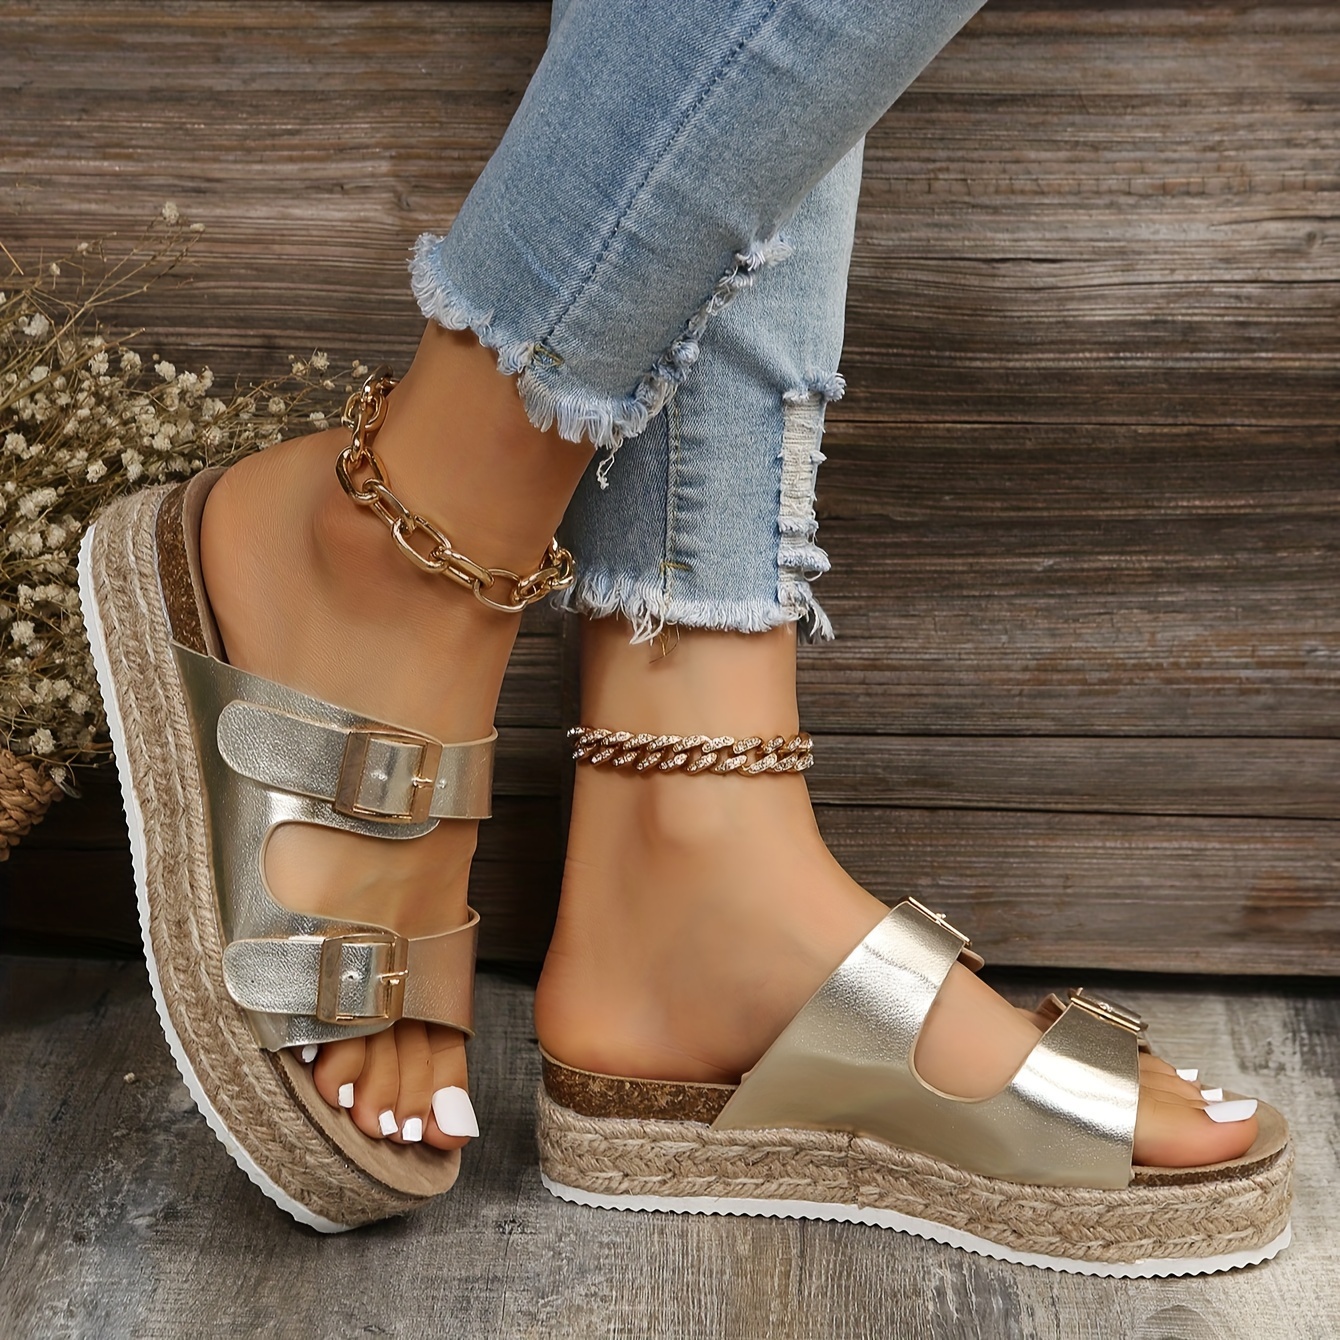  OLLOUM Women's Platform Wedges Sandals Open Toe Buckle  Slingback Espadrilles Band Slip-on Shoes (Color : Beige, Size : US 10) :  Clothing, Shoes & Jewelry